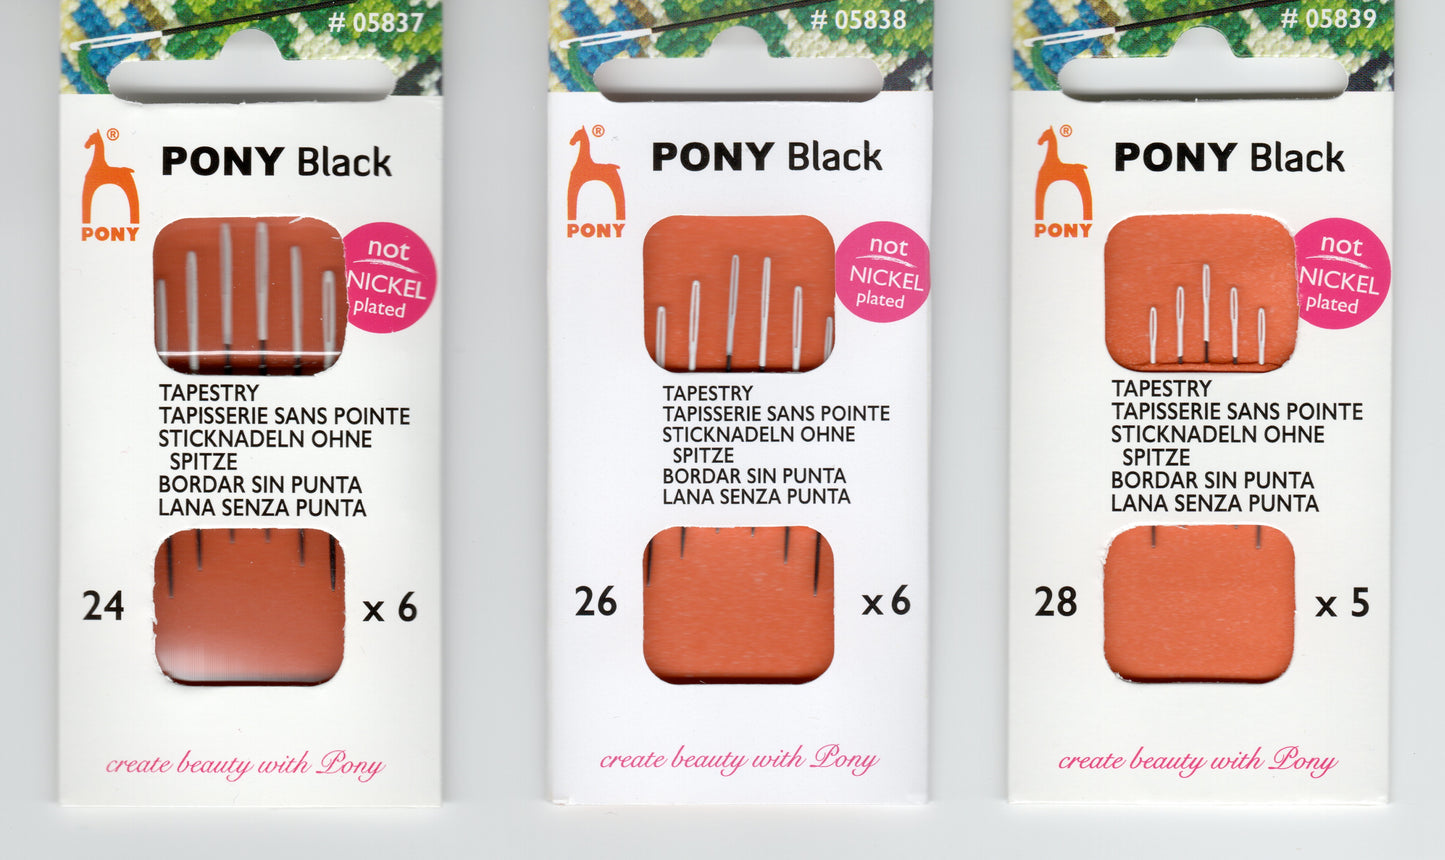 Pony Black Nickel-Free Cross Stitch Needles with White Eyes Size 24, 26, & 28